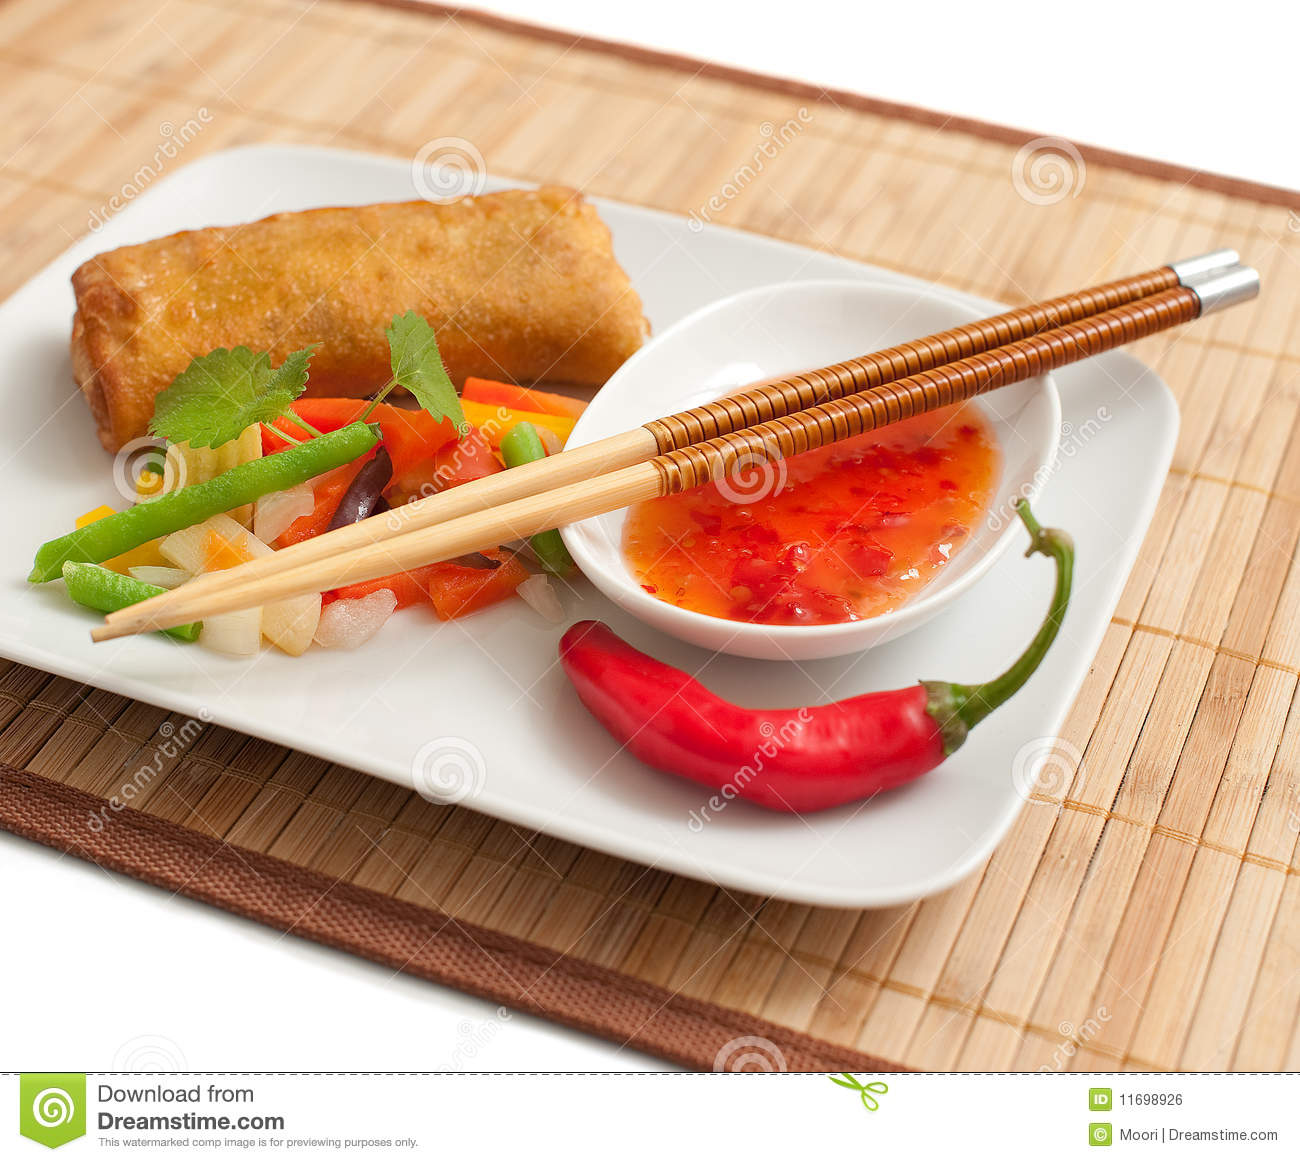 Asian Food Royalty Free Stock Image   Image  11698926